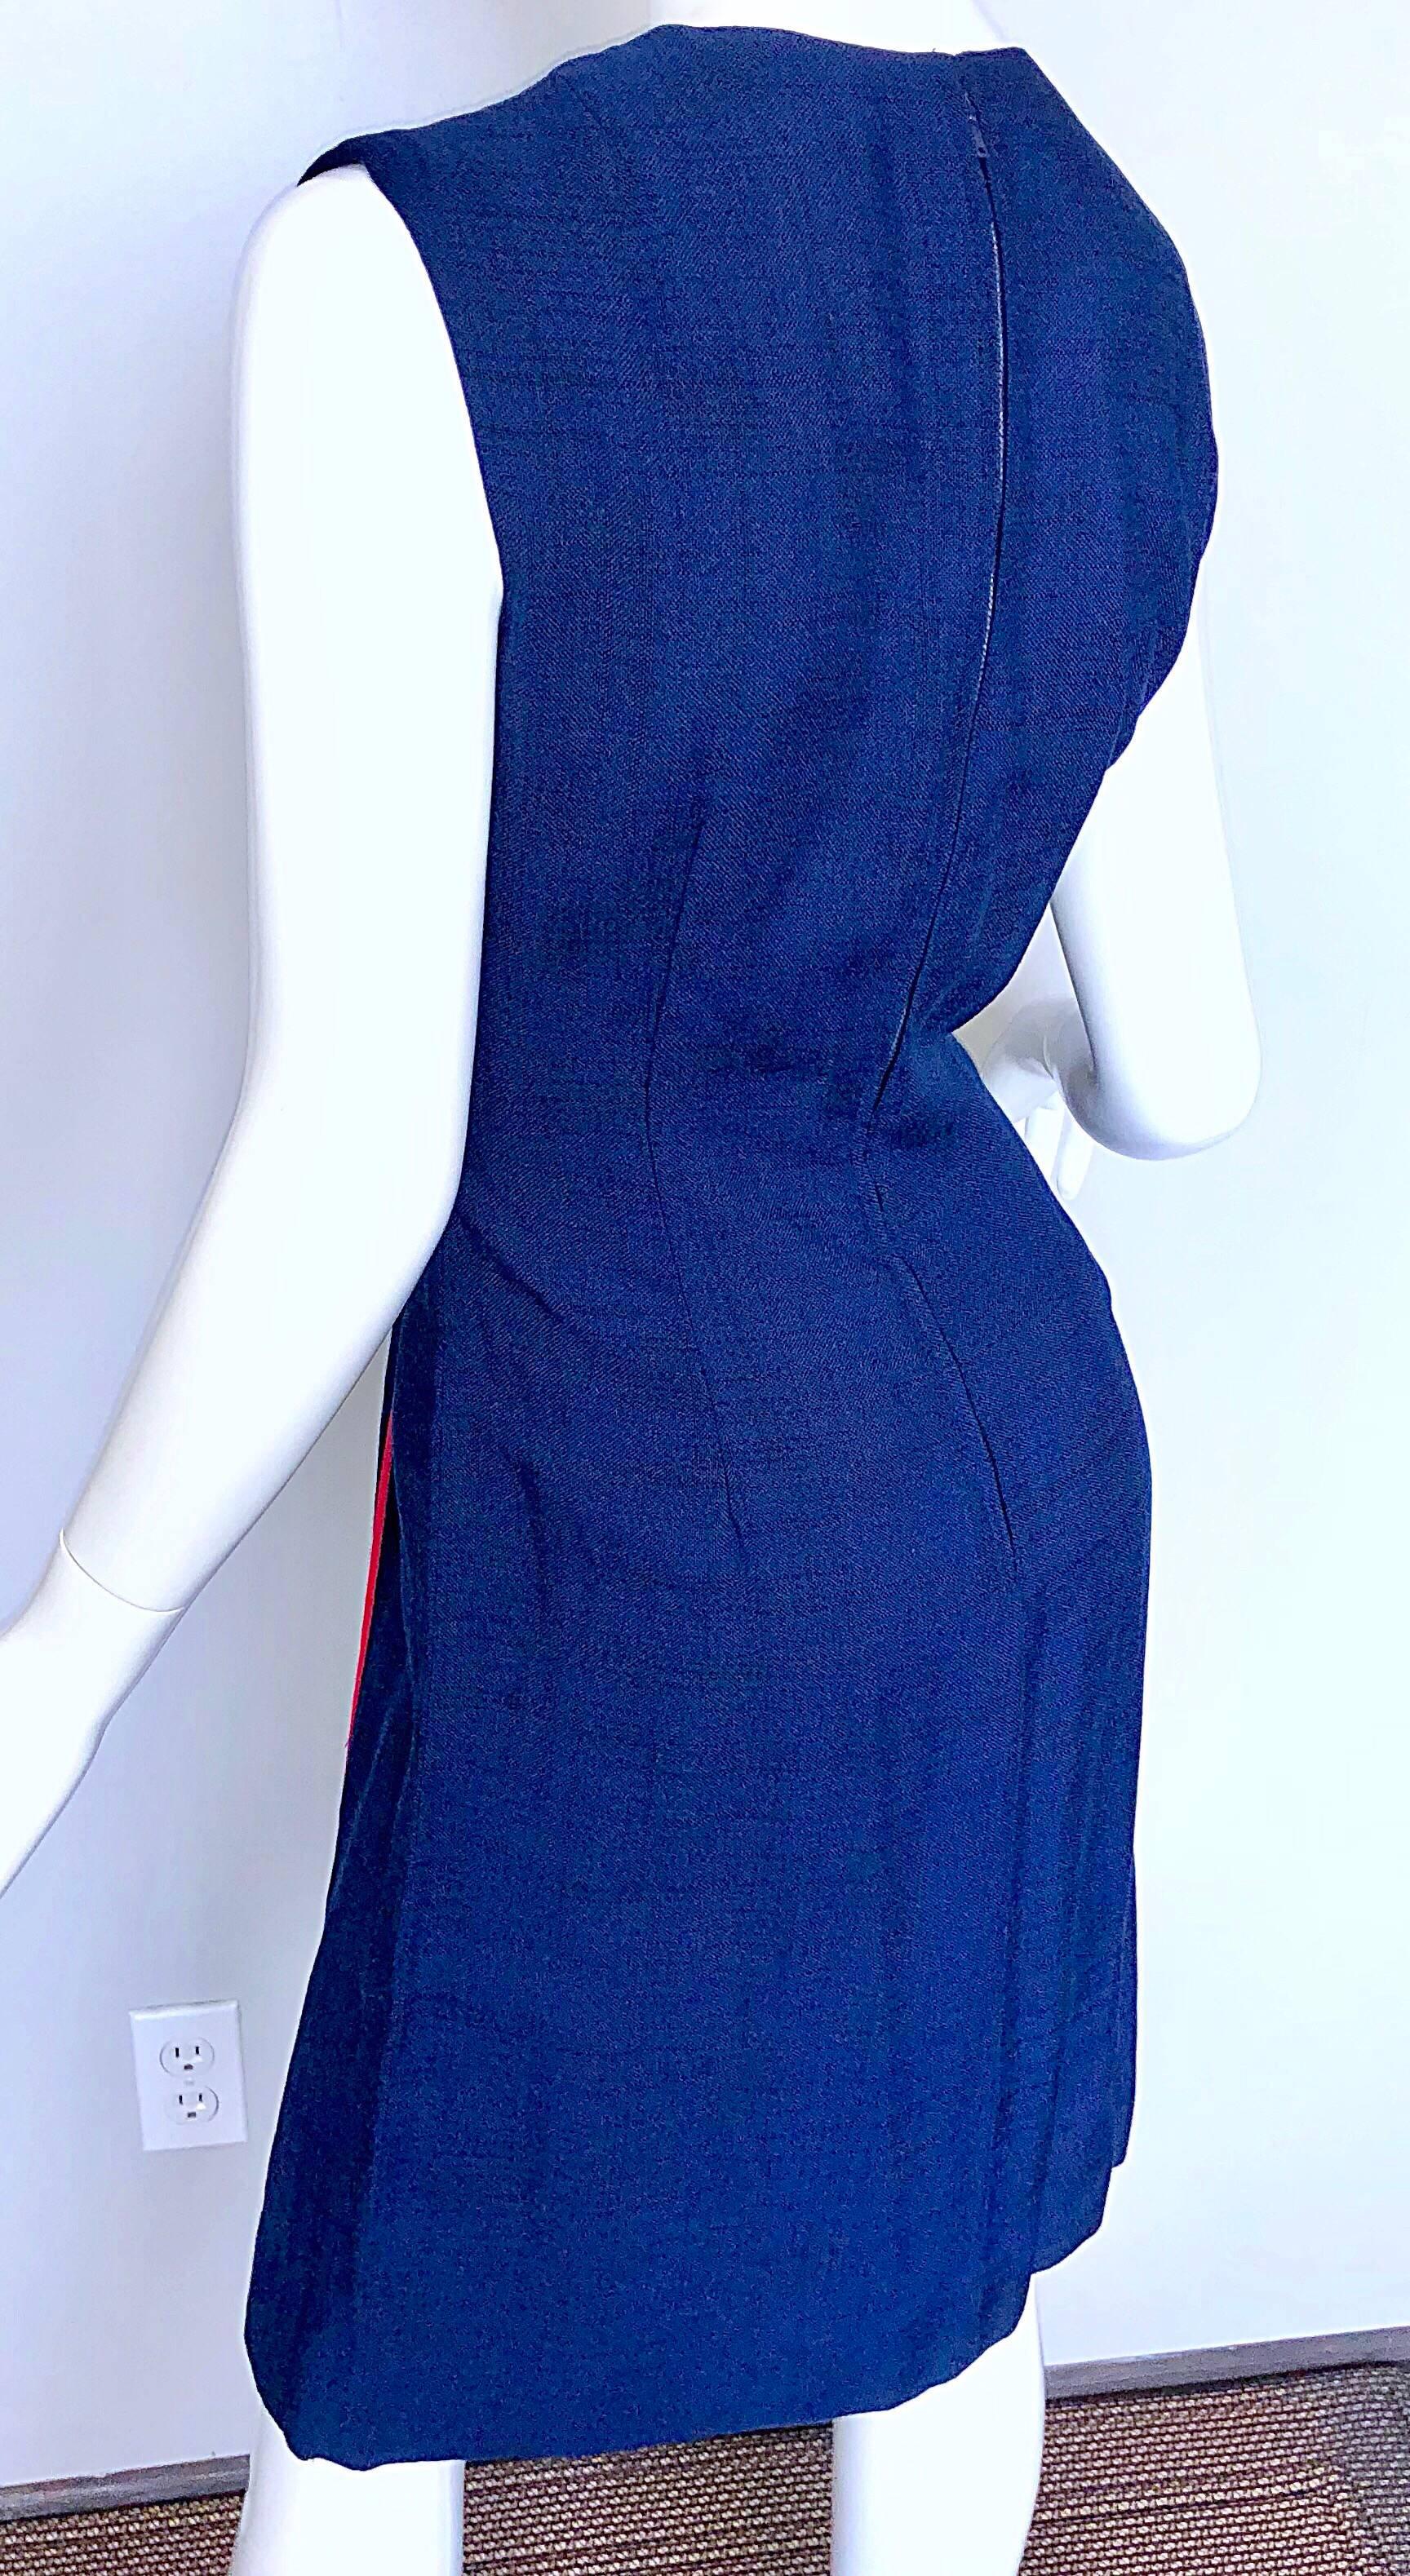 Joseph Magnin 1960s Navy Blue + Red Linen Silk Nautical Vintage 60s Shift Dress For Sale 3